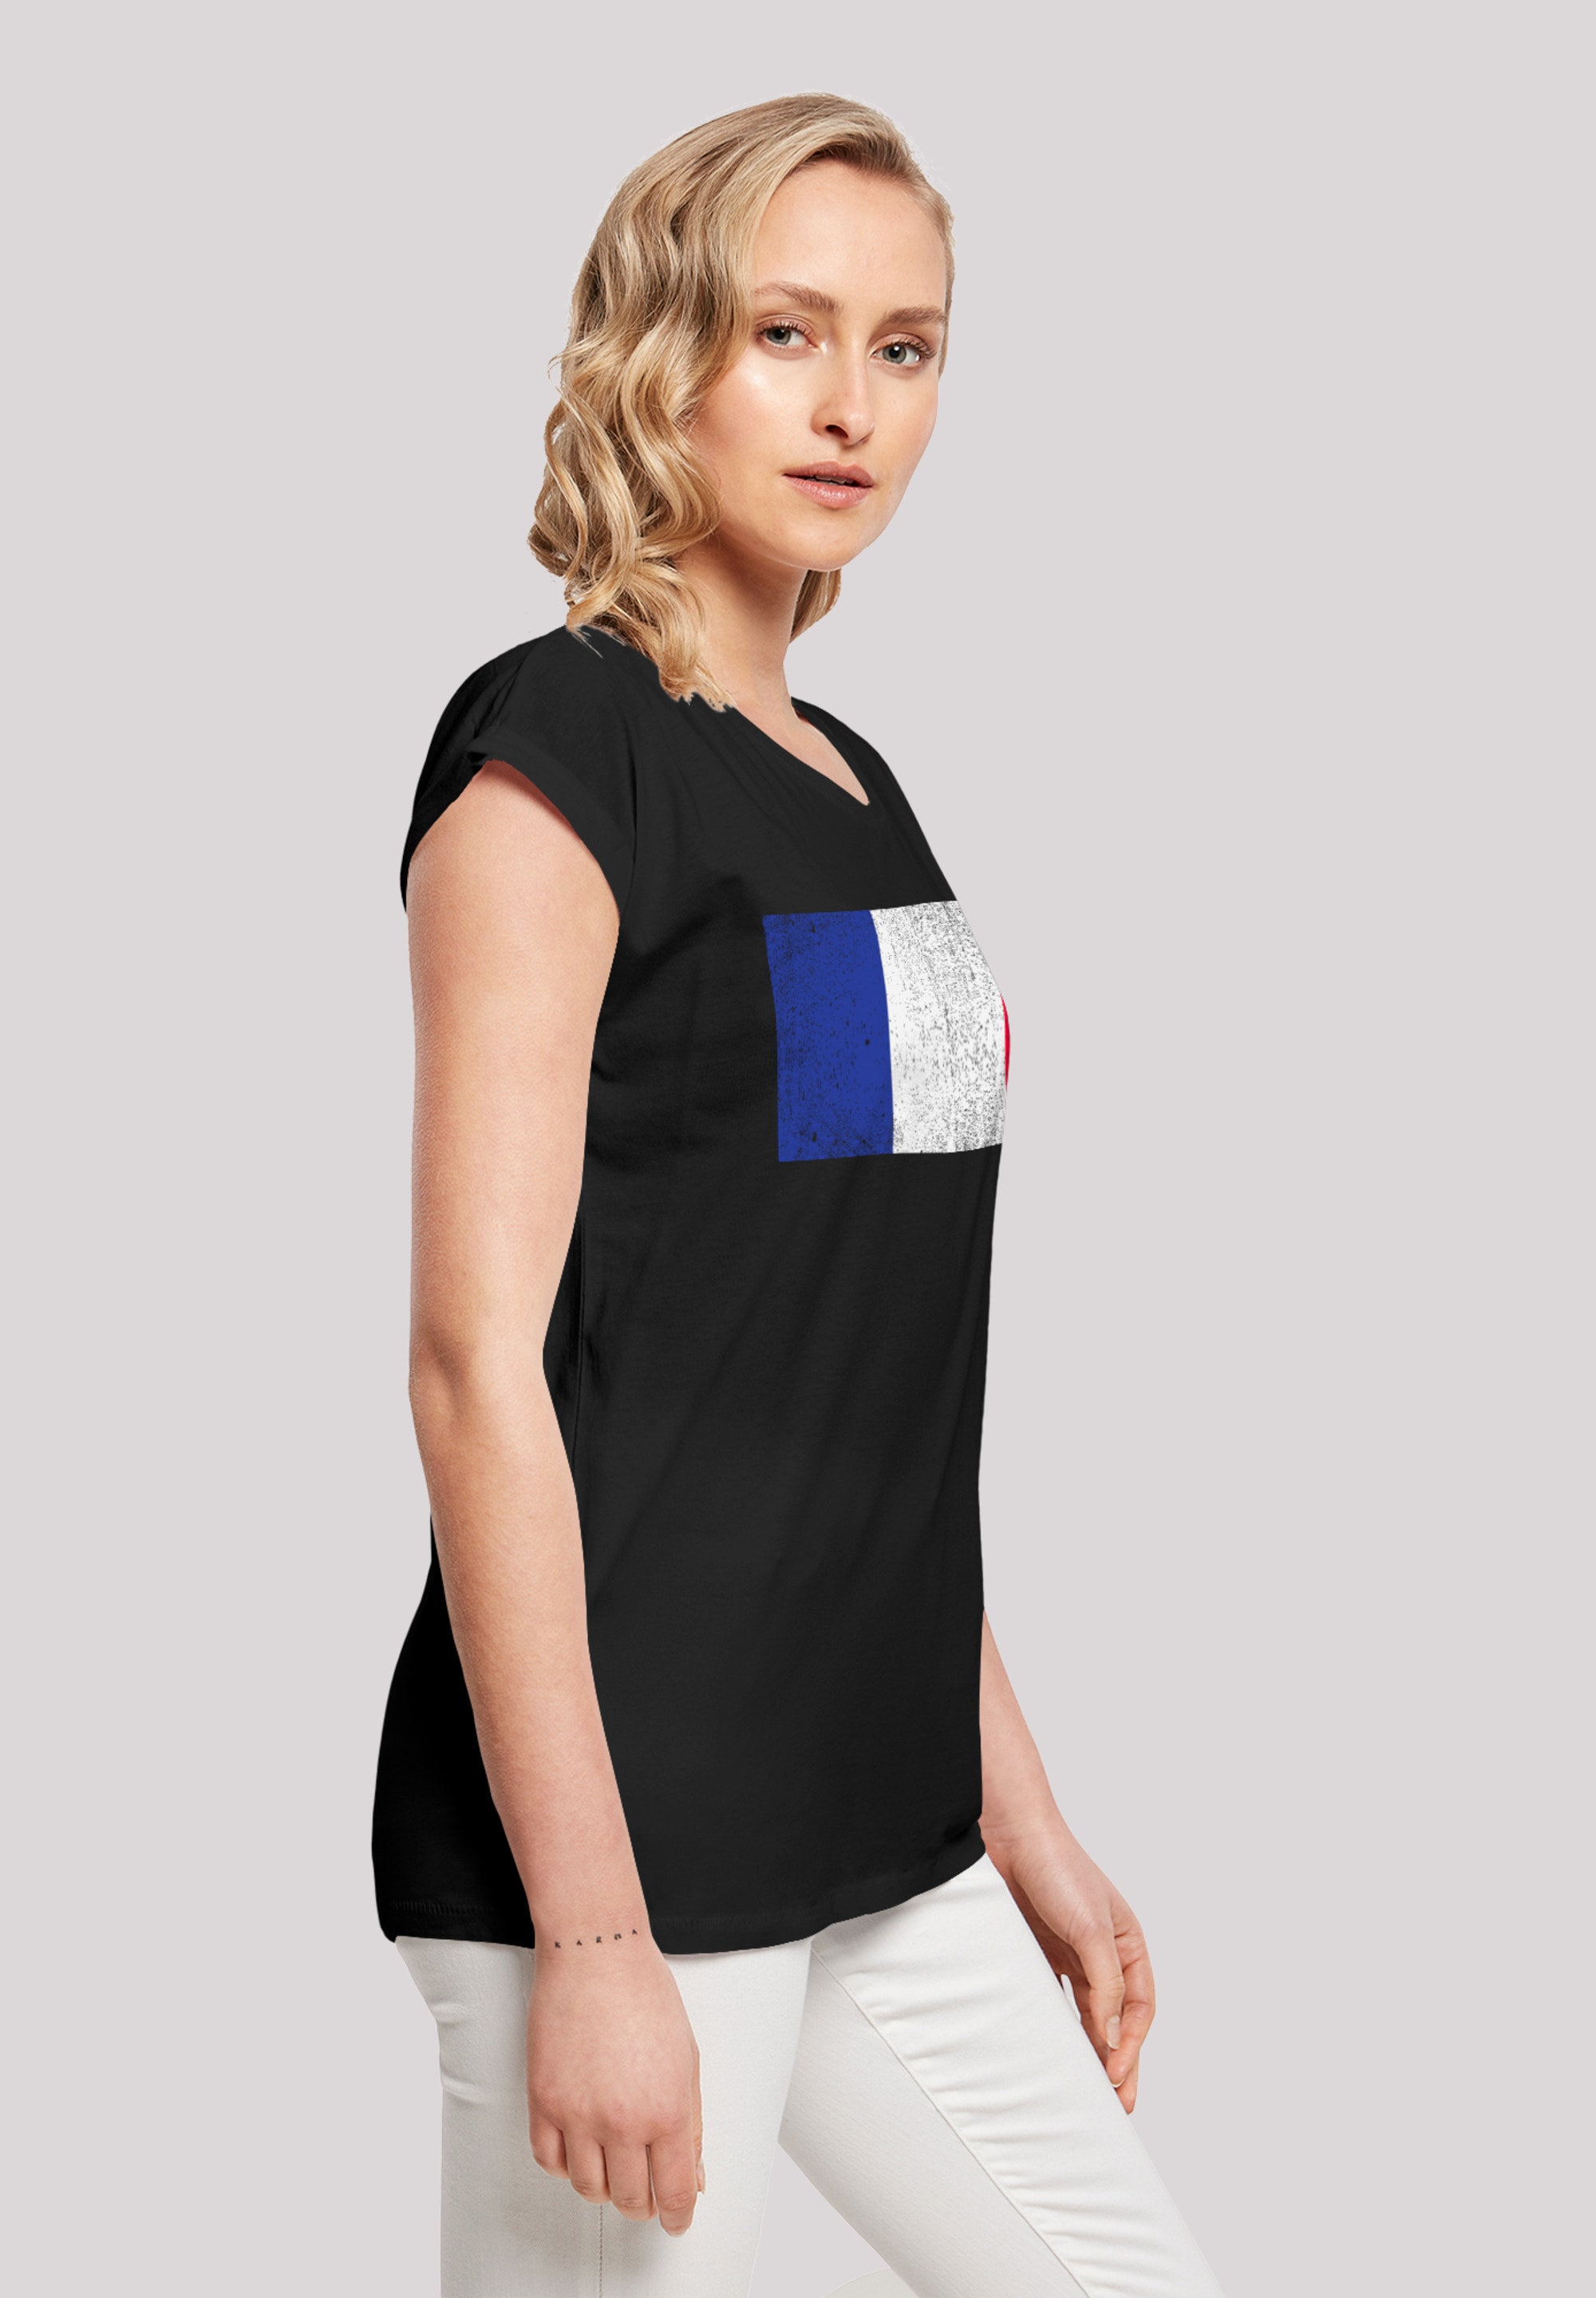 F4NT4STIC T-Shirt »France Frankreich Flagge distressed«, Print shoppen |  I'm walking